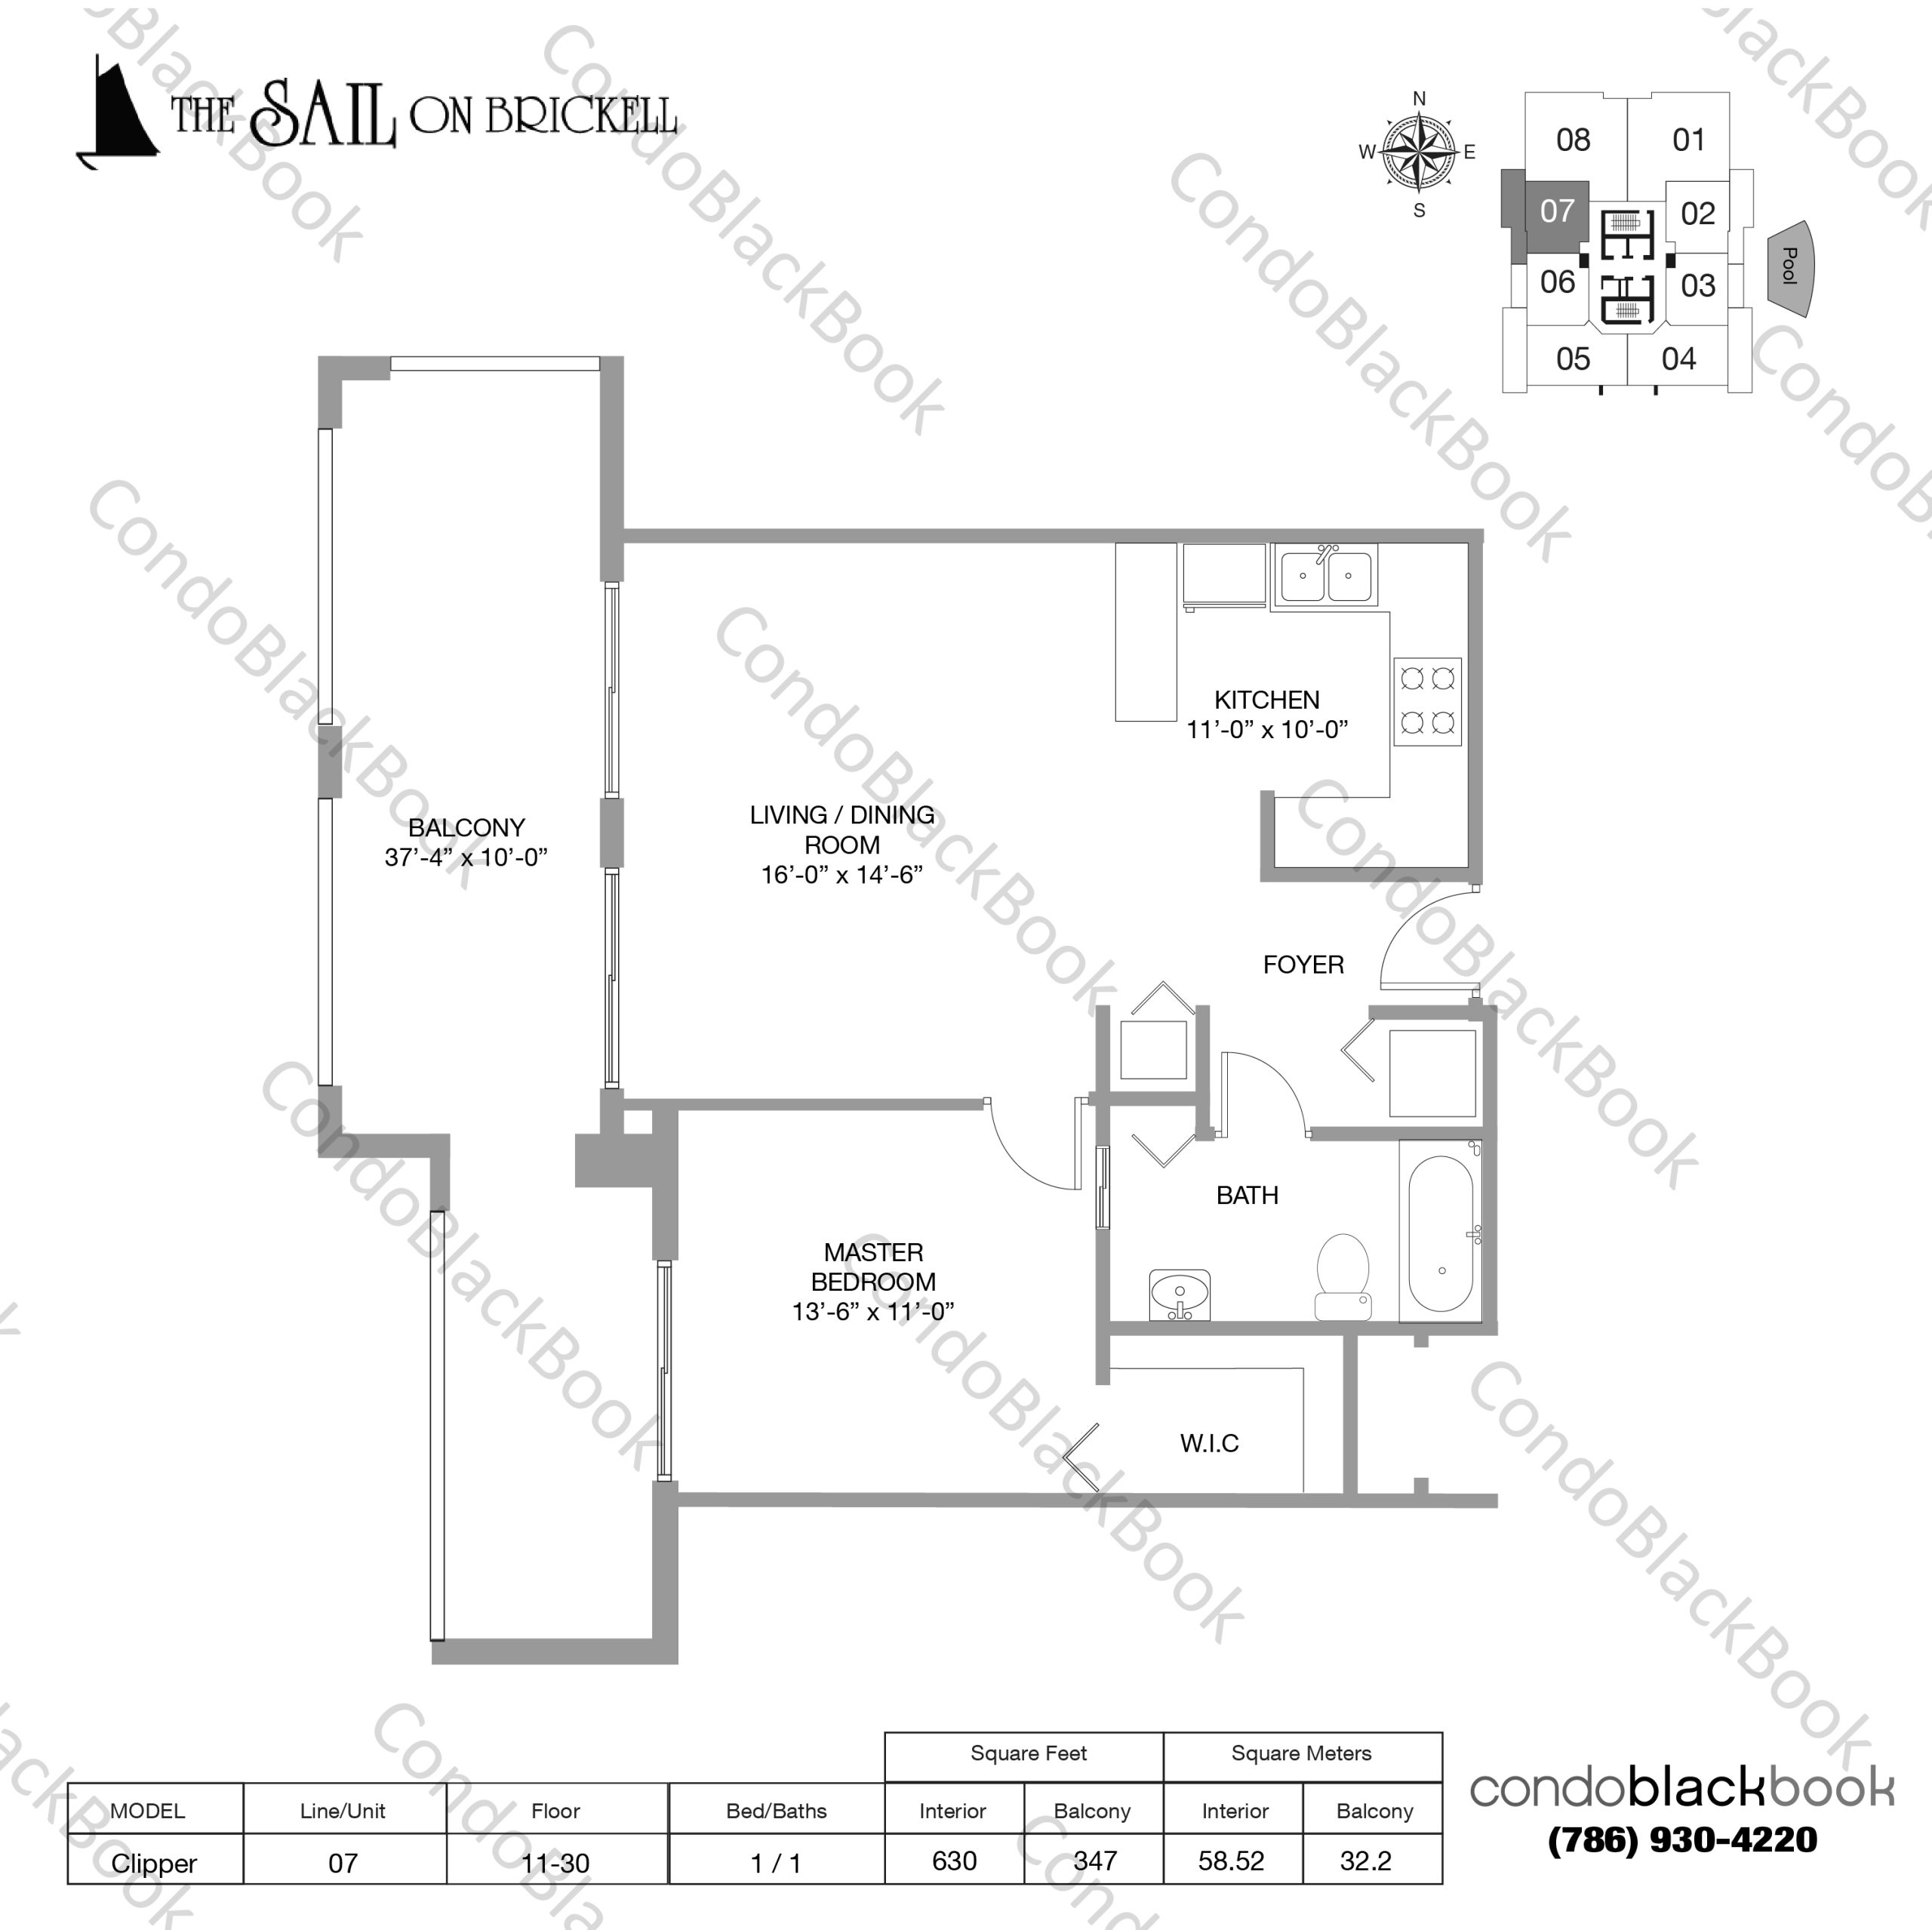 The Sail Brickell Floor Plan - floorplans.click